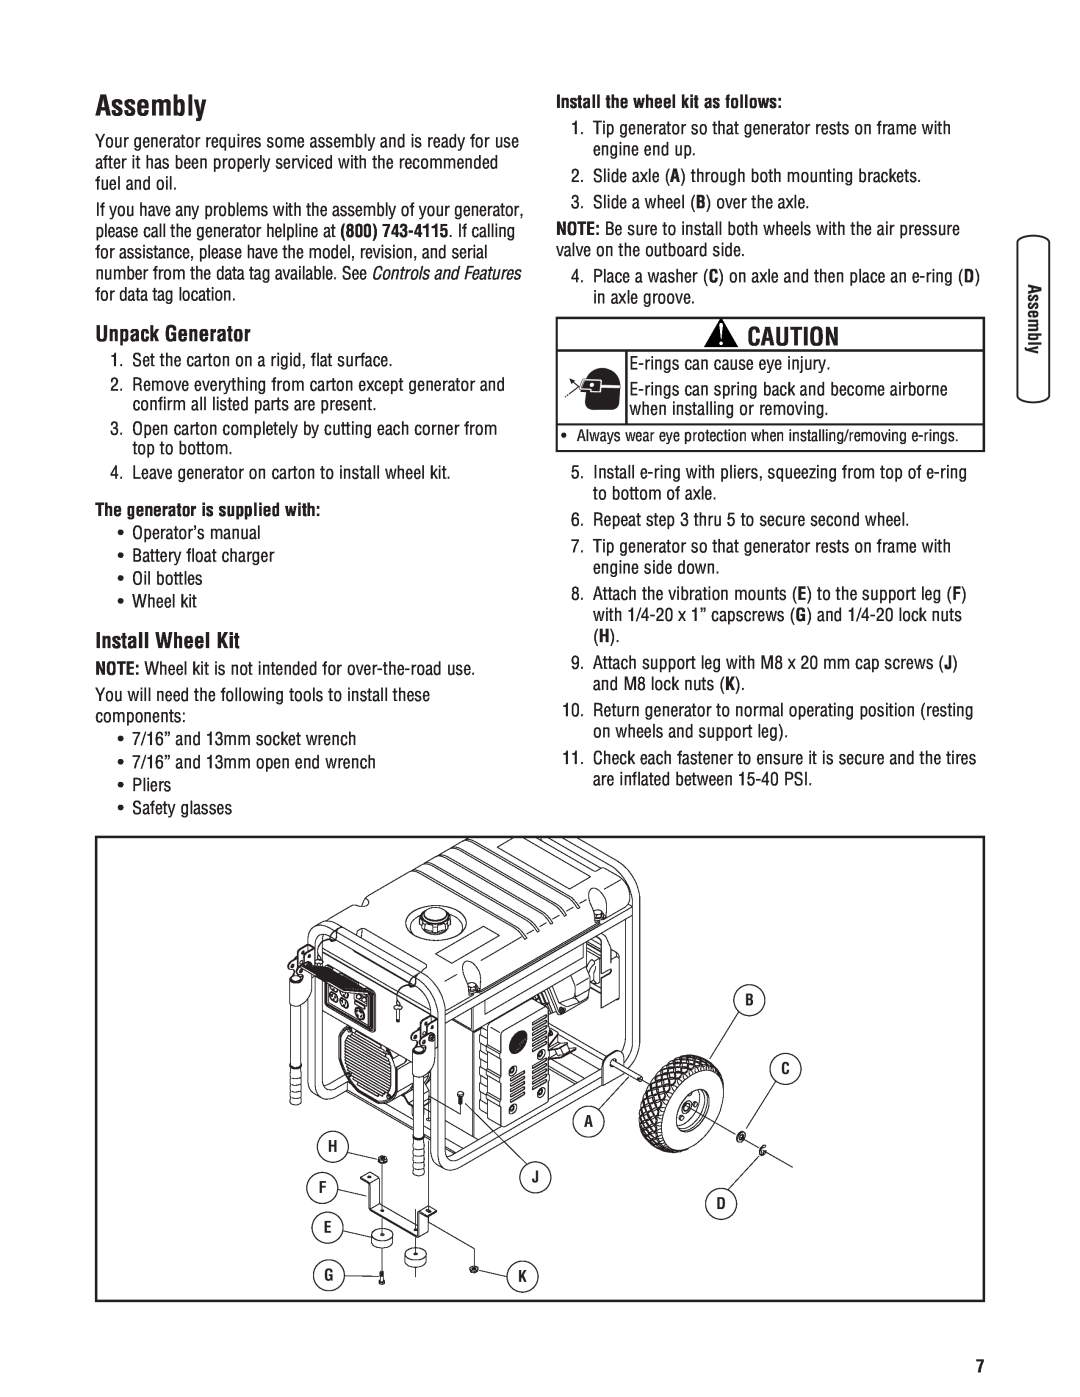 Briggs & Stratton 13500 manual Assembly, Unpack Generator, Install Wheel Kit, Install the wheel kit as follows 